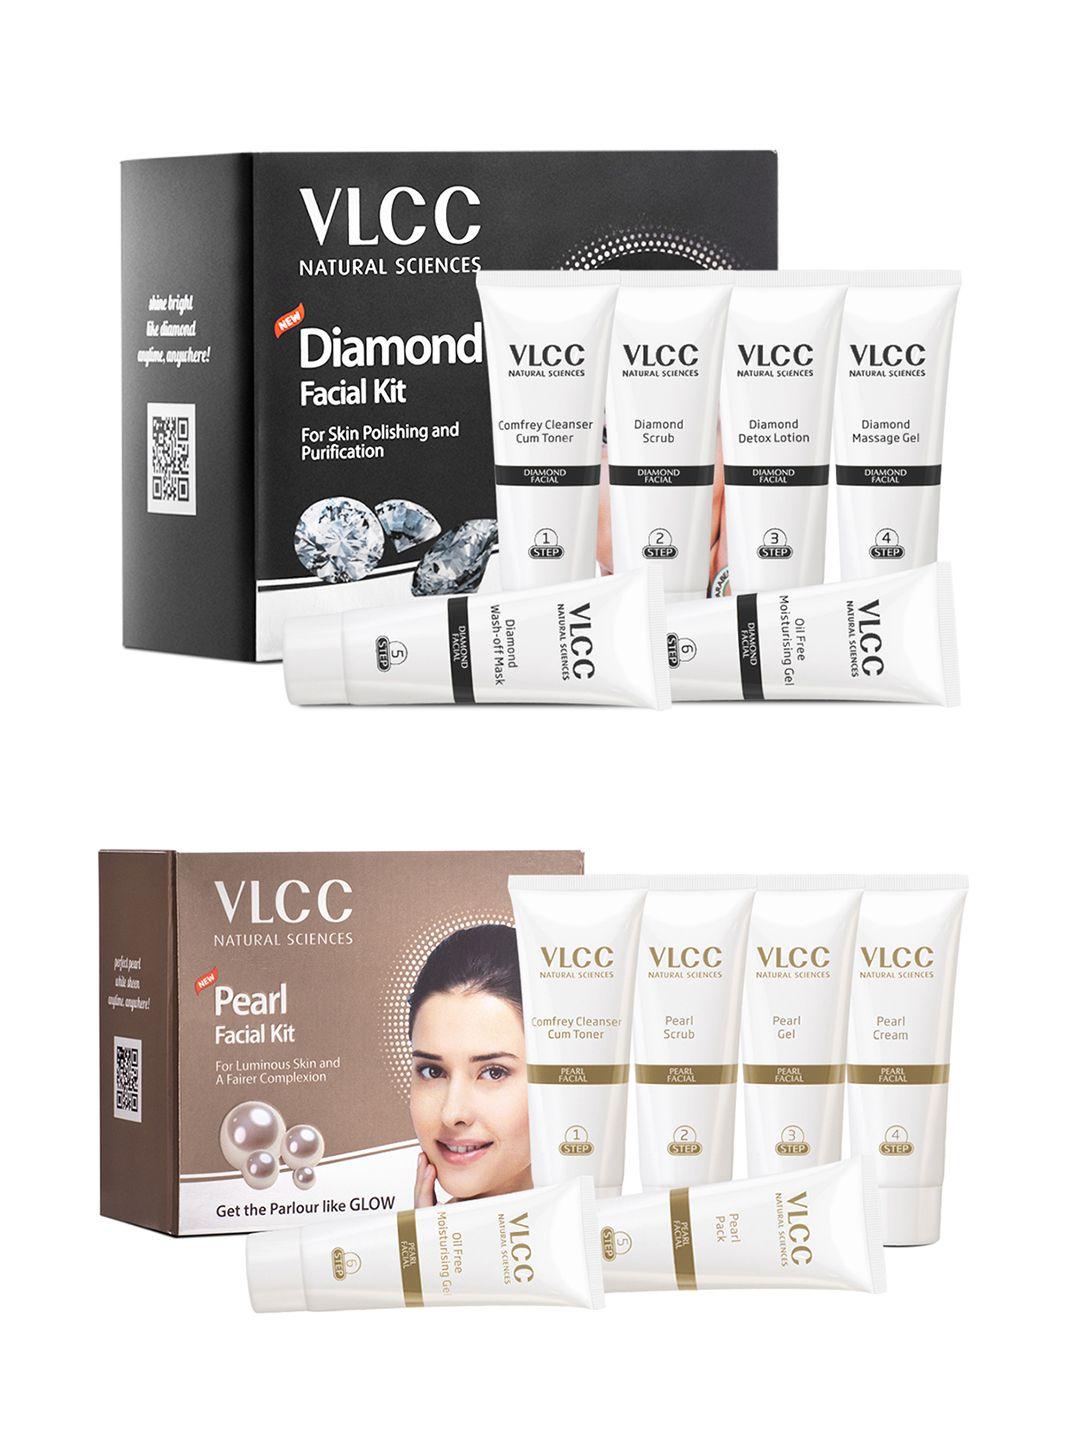 vlcc set of 2 single facial kit - 60g each - diamond & pearl